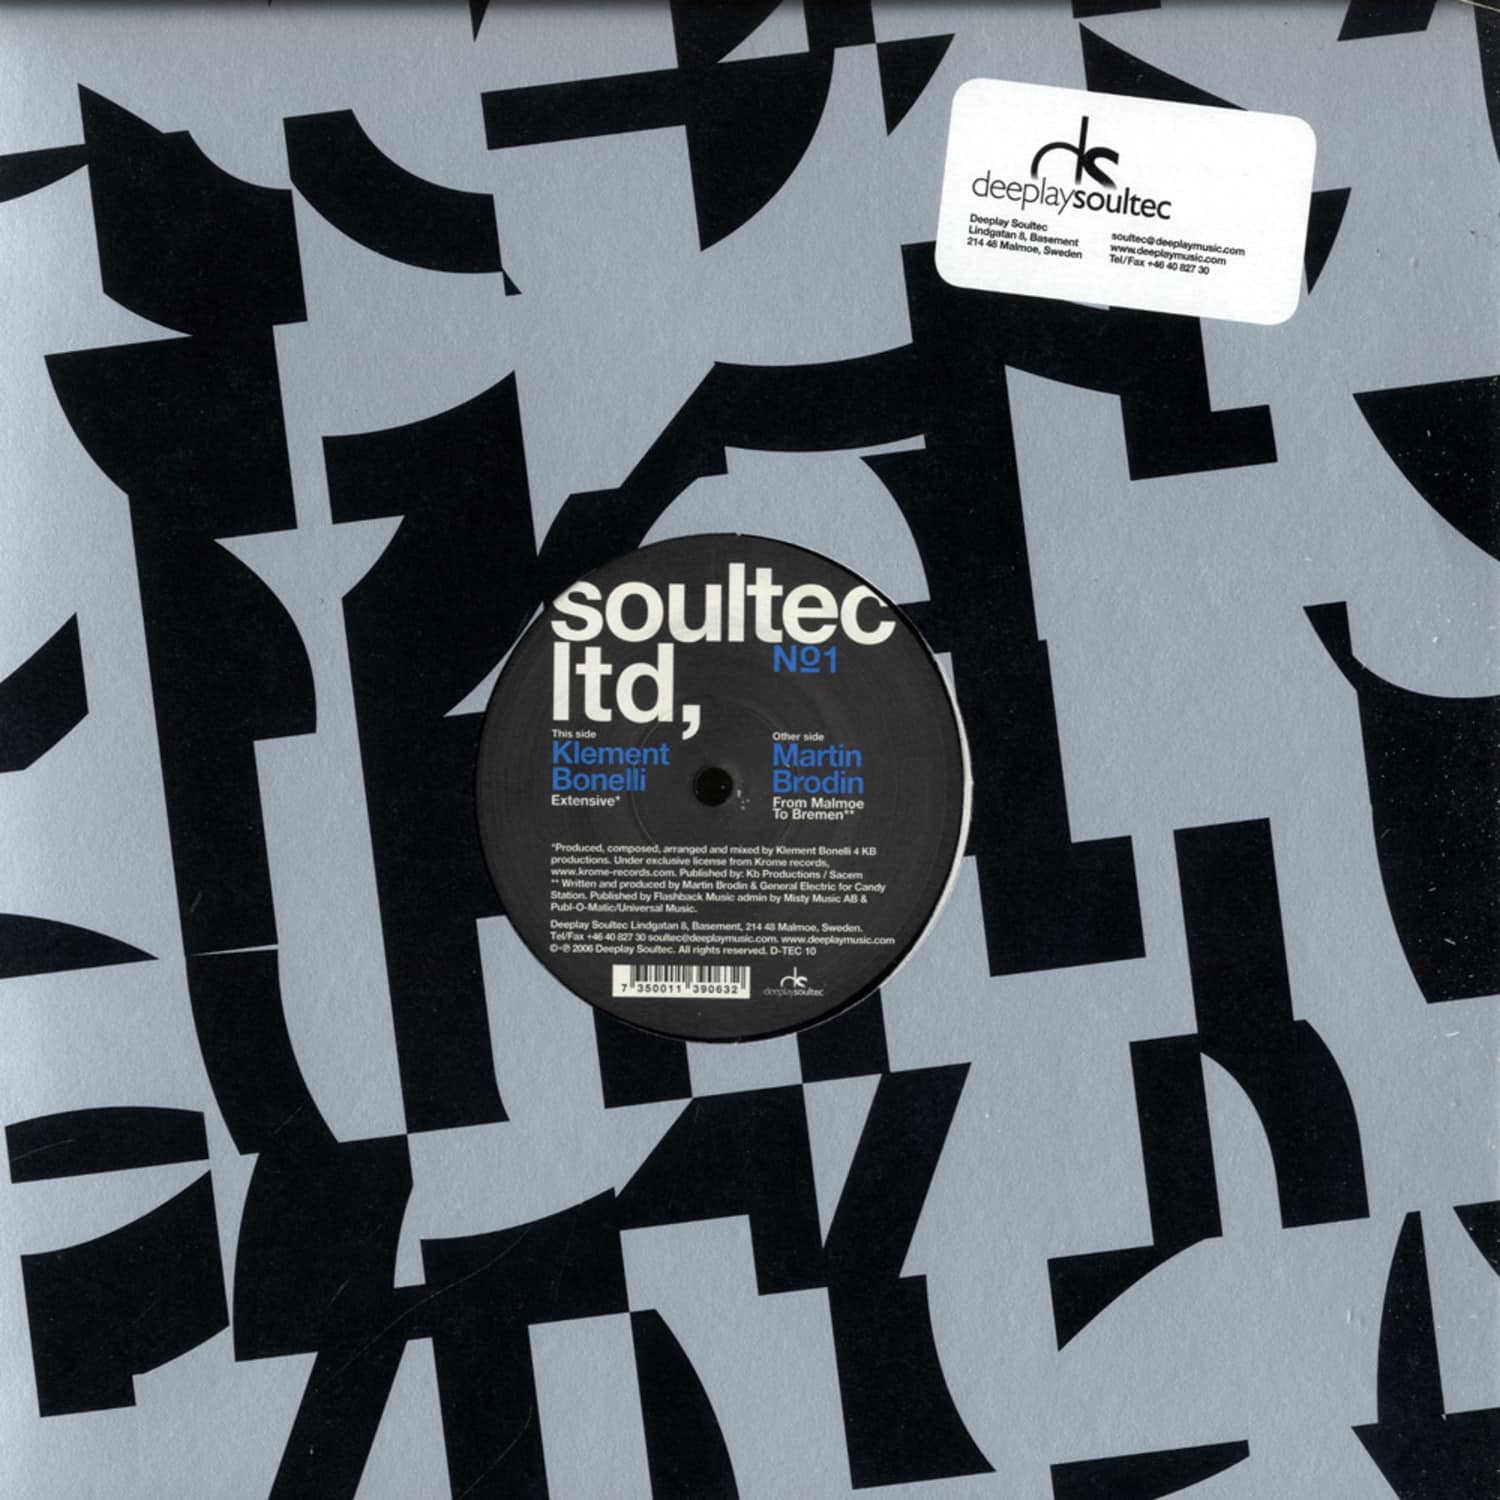 Klement Bonelli / Martin Brodin - Soultec Ltd No 1